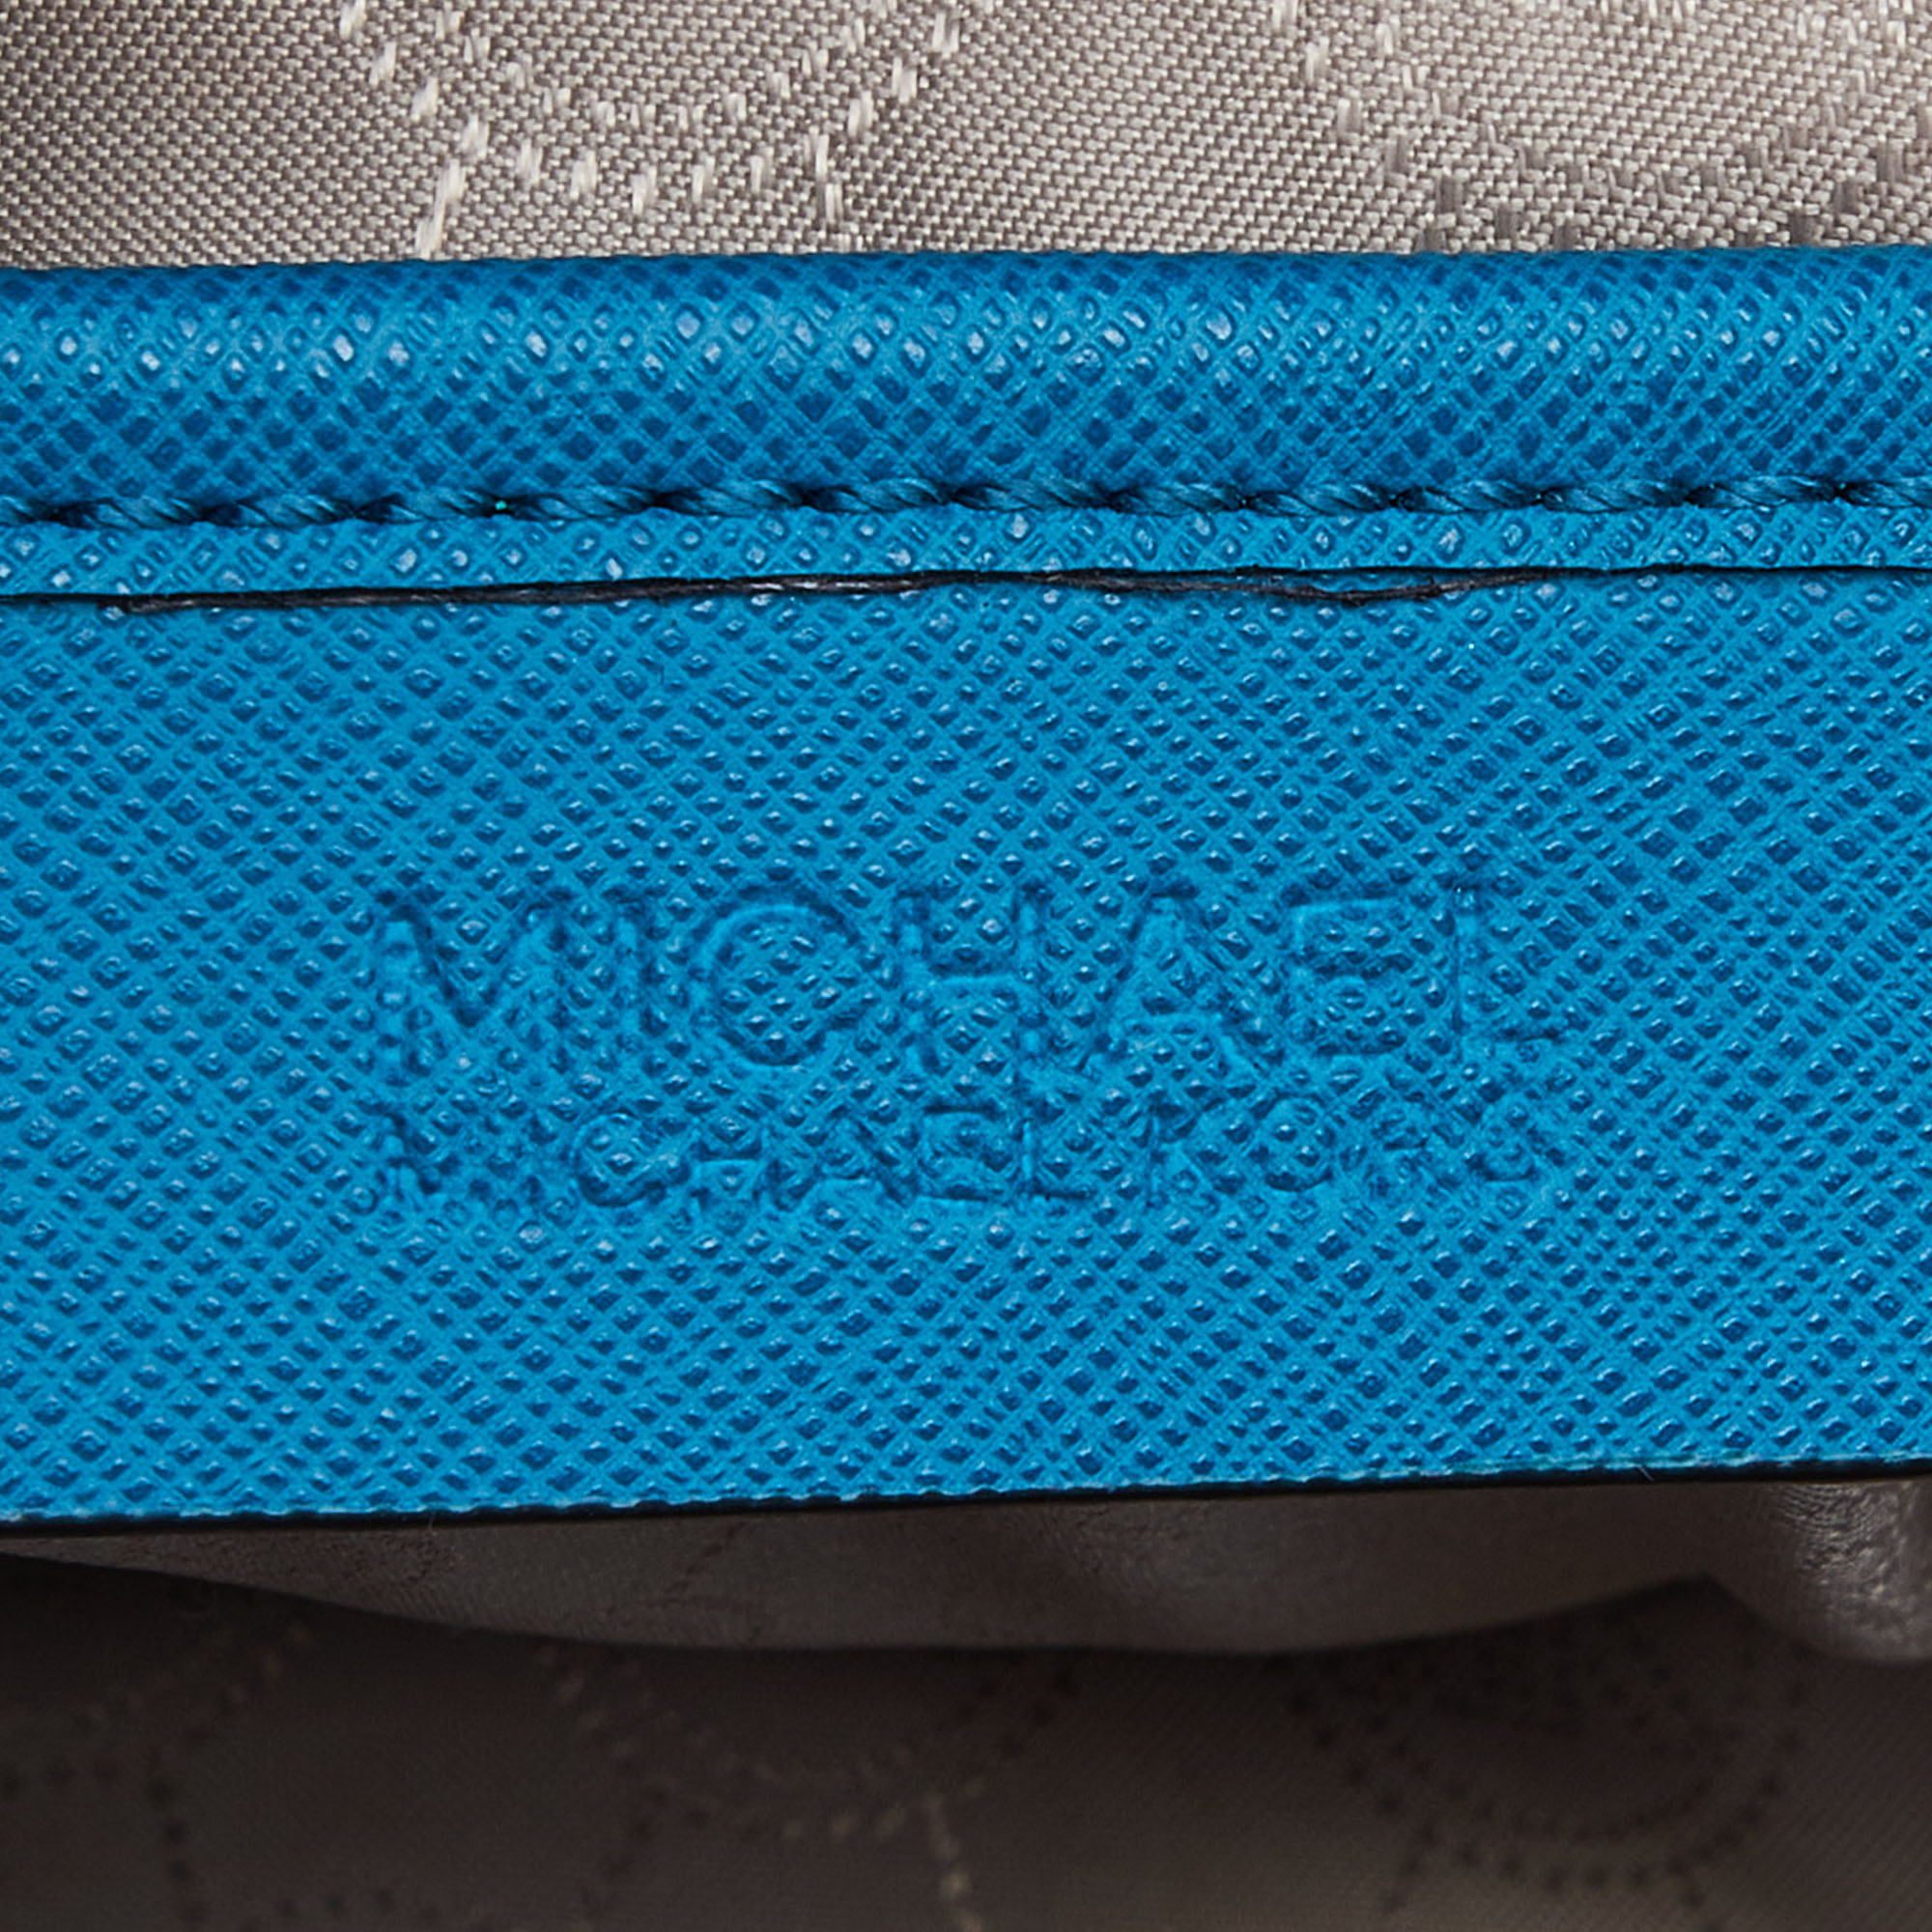 MICHAEL Michael Kors Blue Leather Studded Selma Satchel